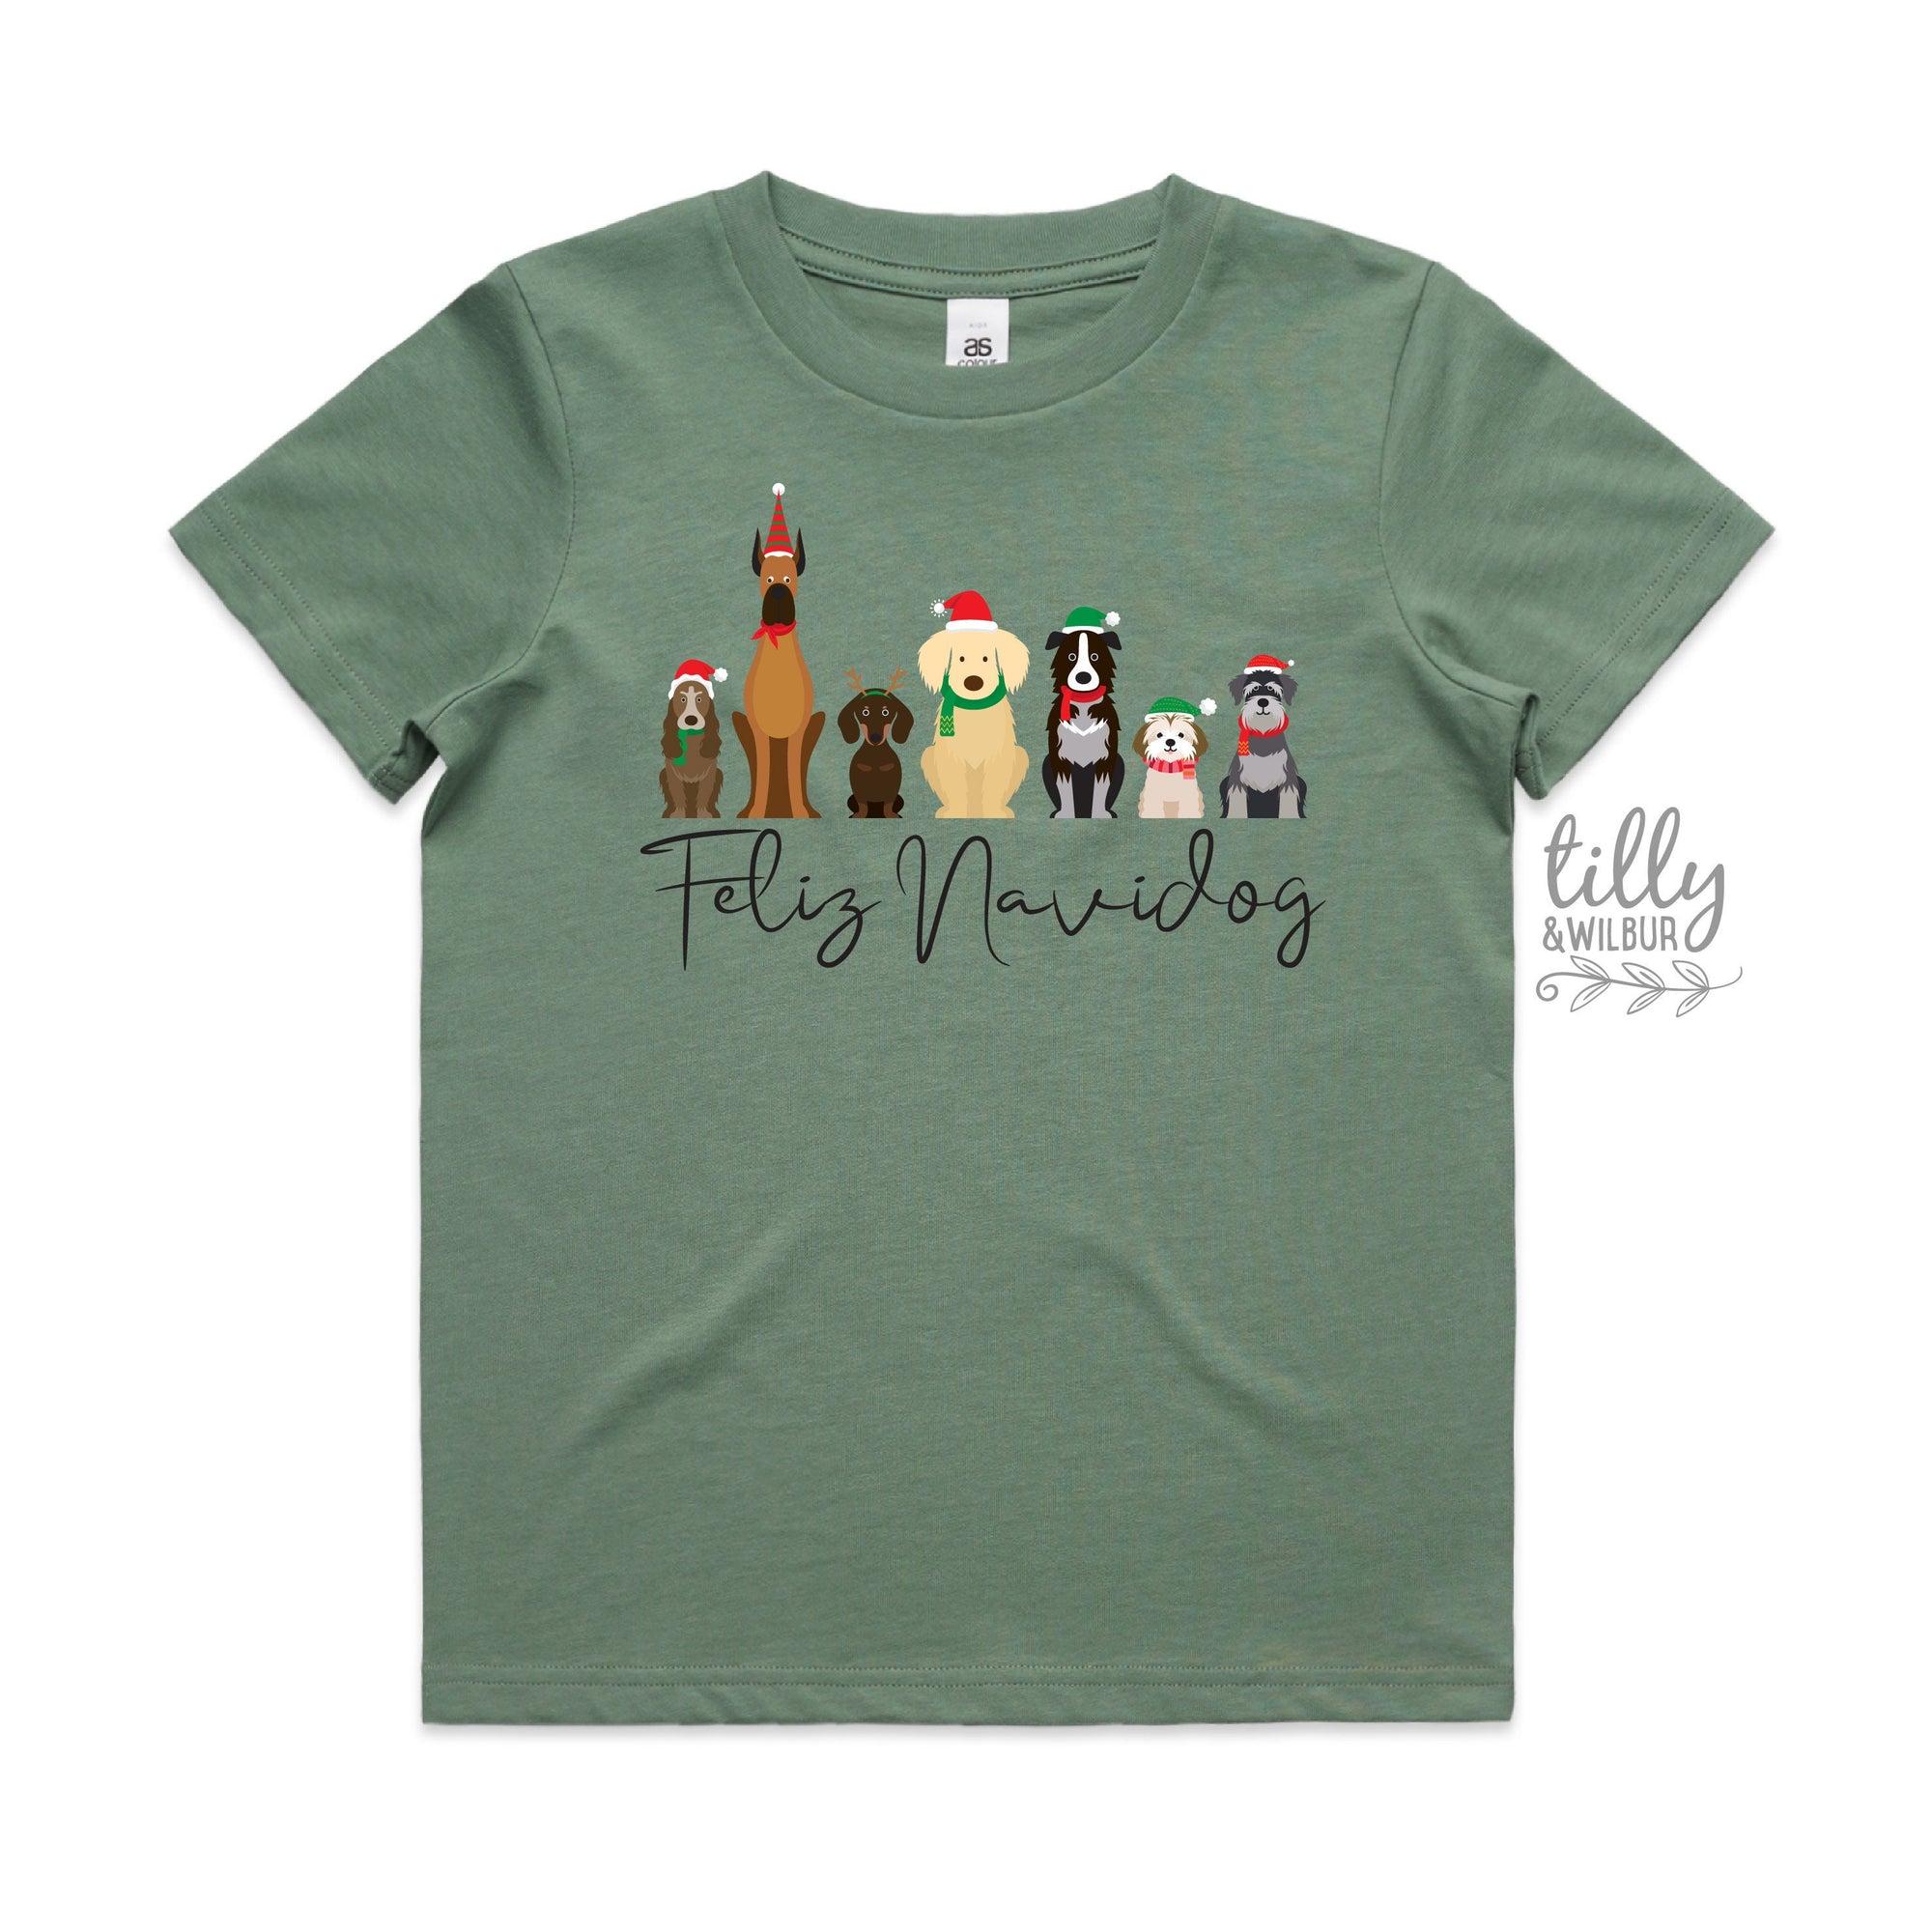 Feliz Navidog Christmas T-Shirt, Dog T-Shirt, Christmas Dog T-Shirt, Dog Christmas T-Shirt, Kid's Dog T-Shirt, Dog Lovers T-Shirt, Spain